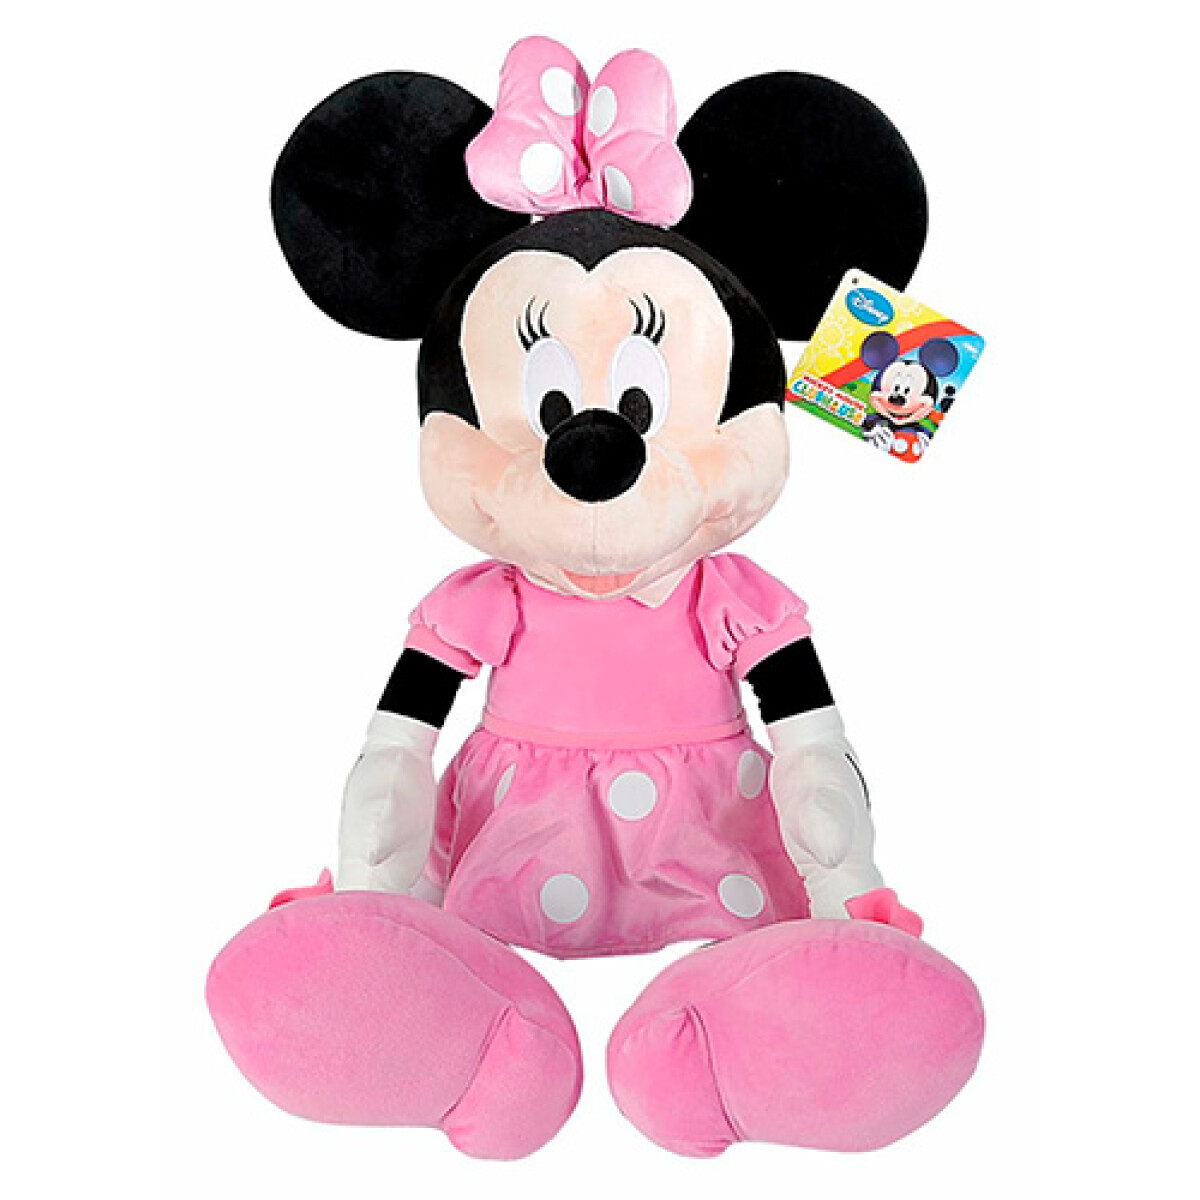 Peluche Original Disney Minnie 46 cm Vestido Clasico - 001 